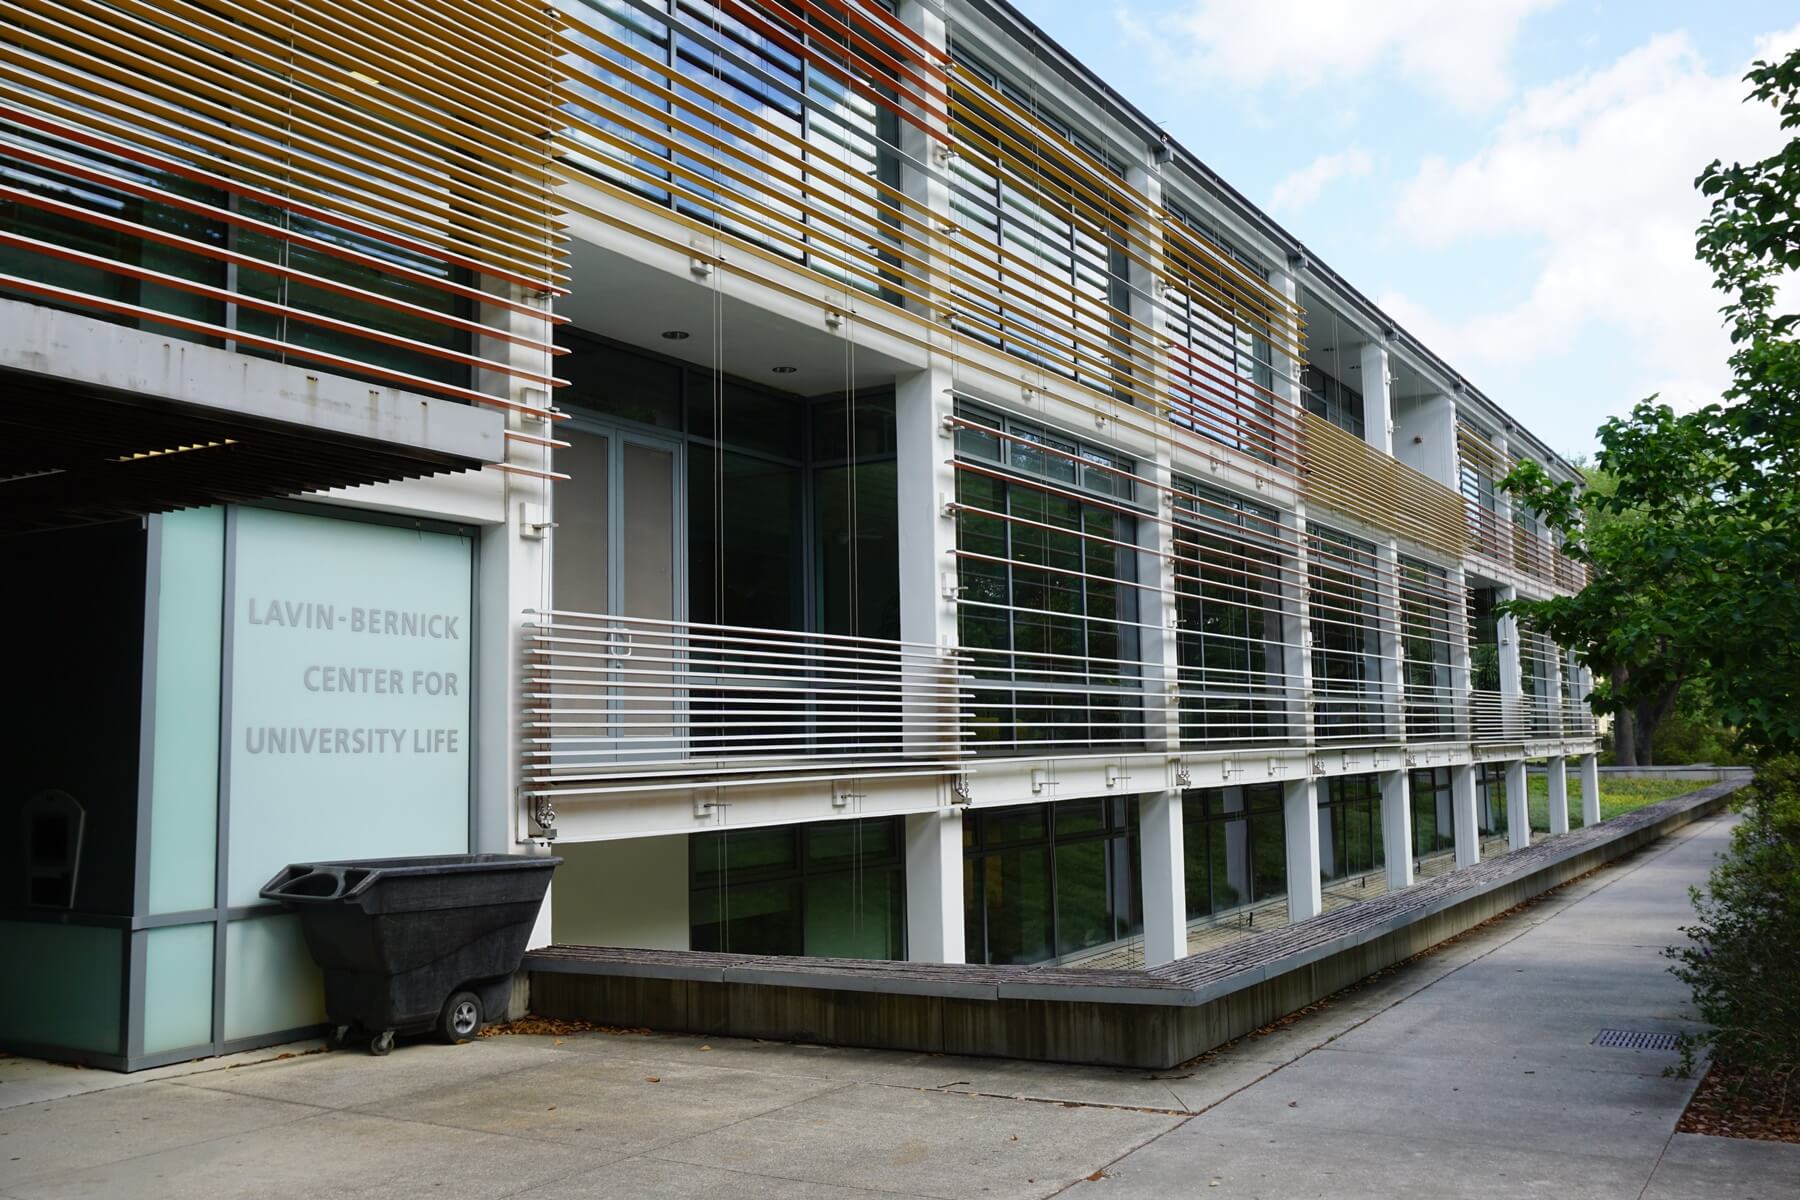 The Lavin-Bernick Center at Tulane University